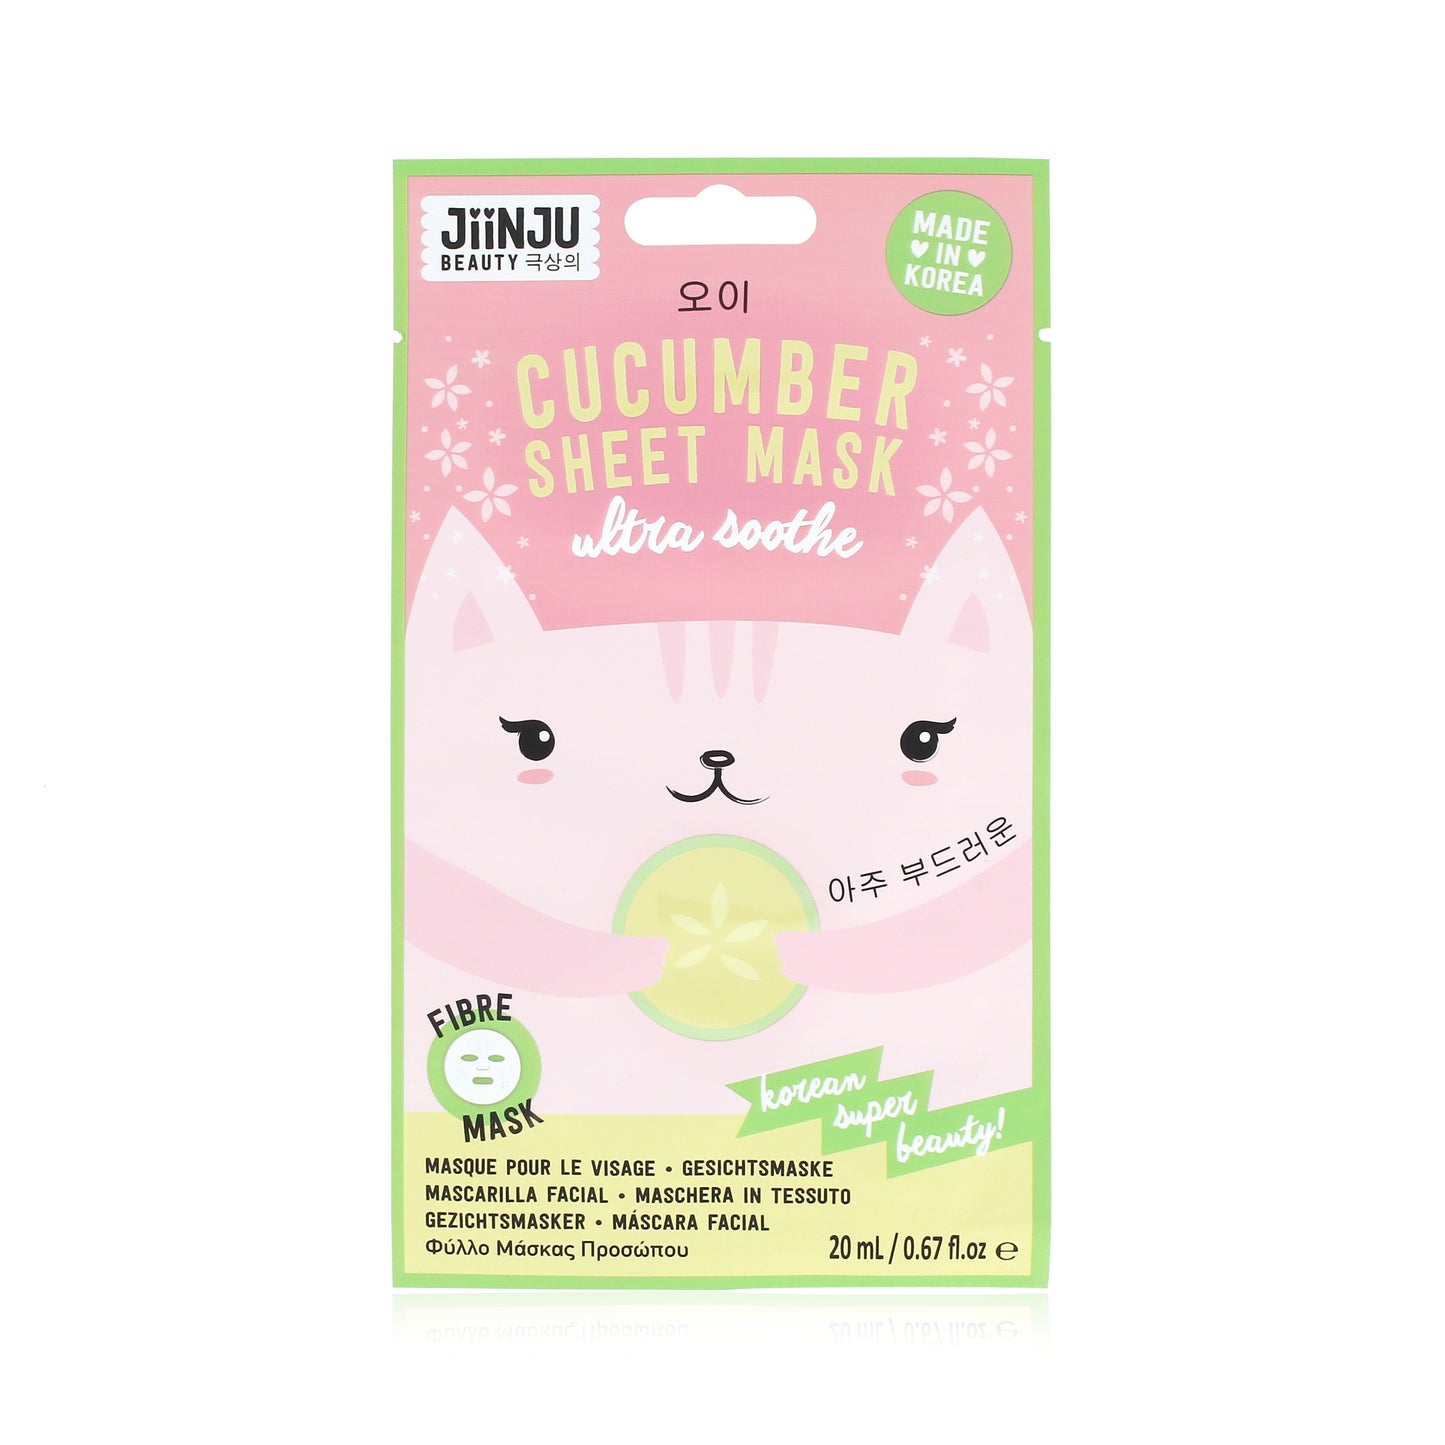 Jiinju Cucumber Sheet Mask